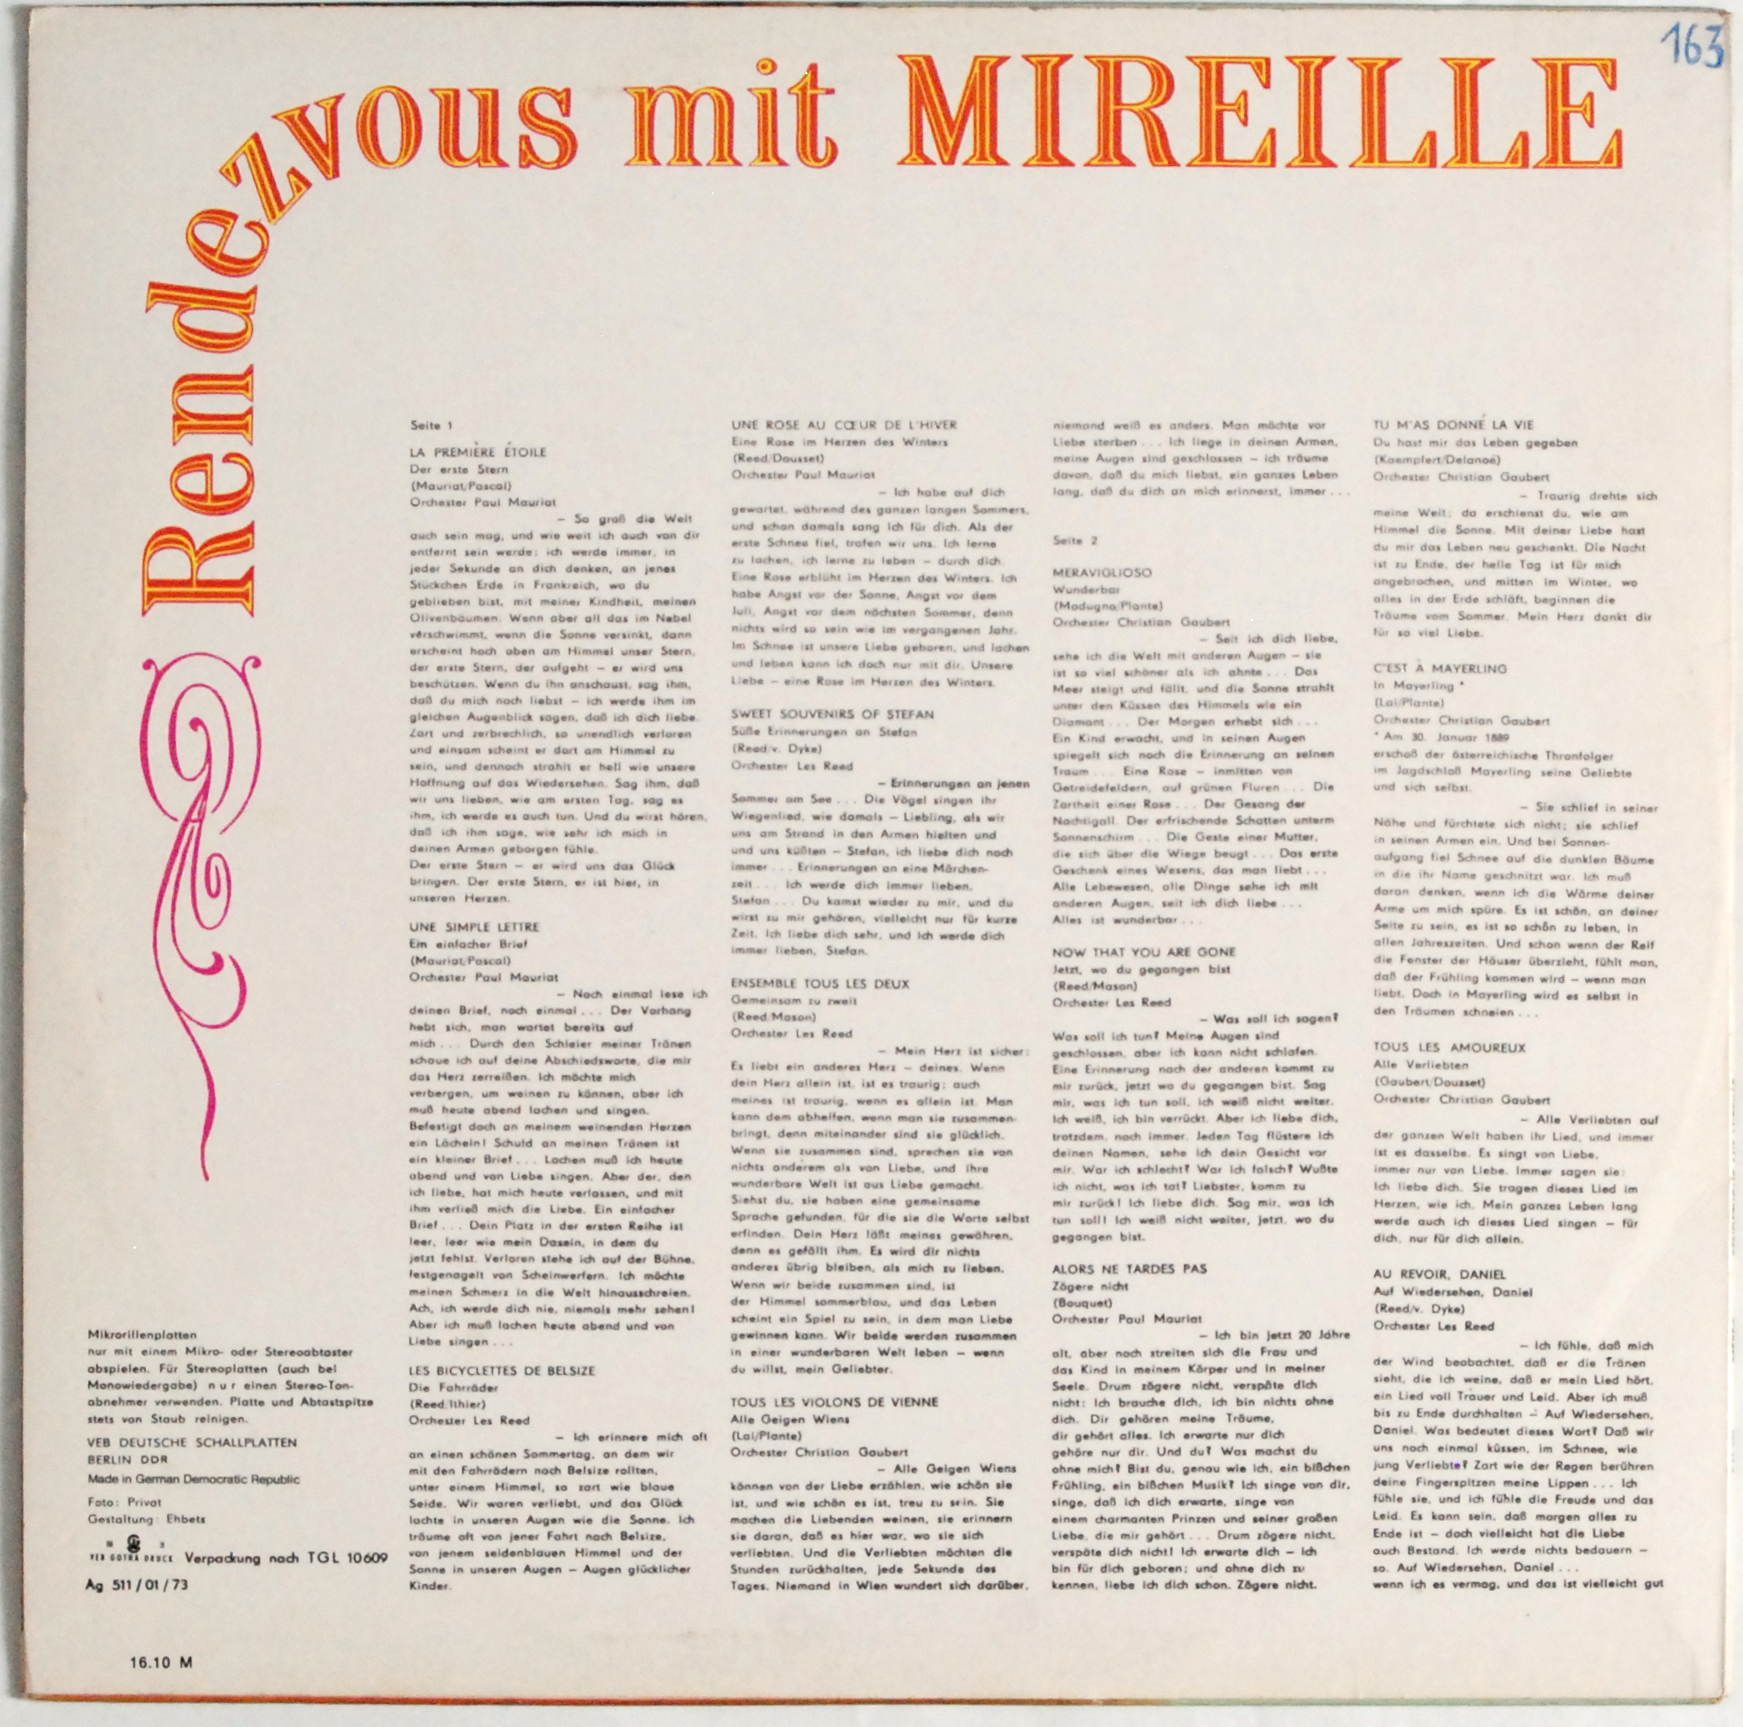 Mireille Mathieu - Rendezvous Mit Mireille s.EX+